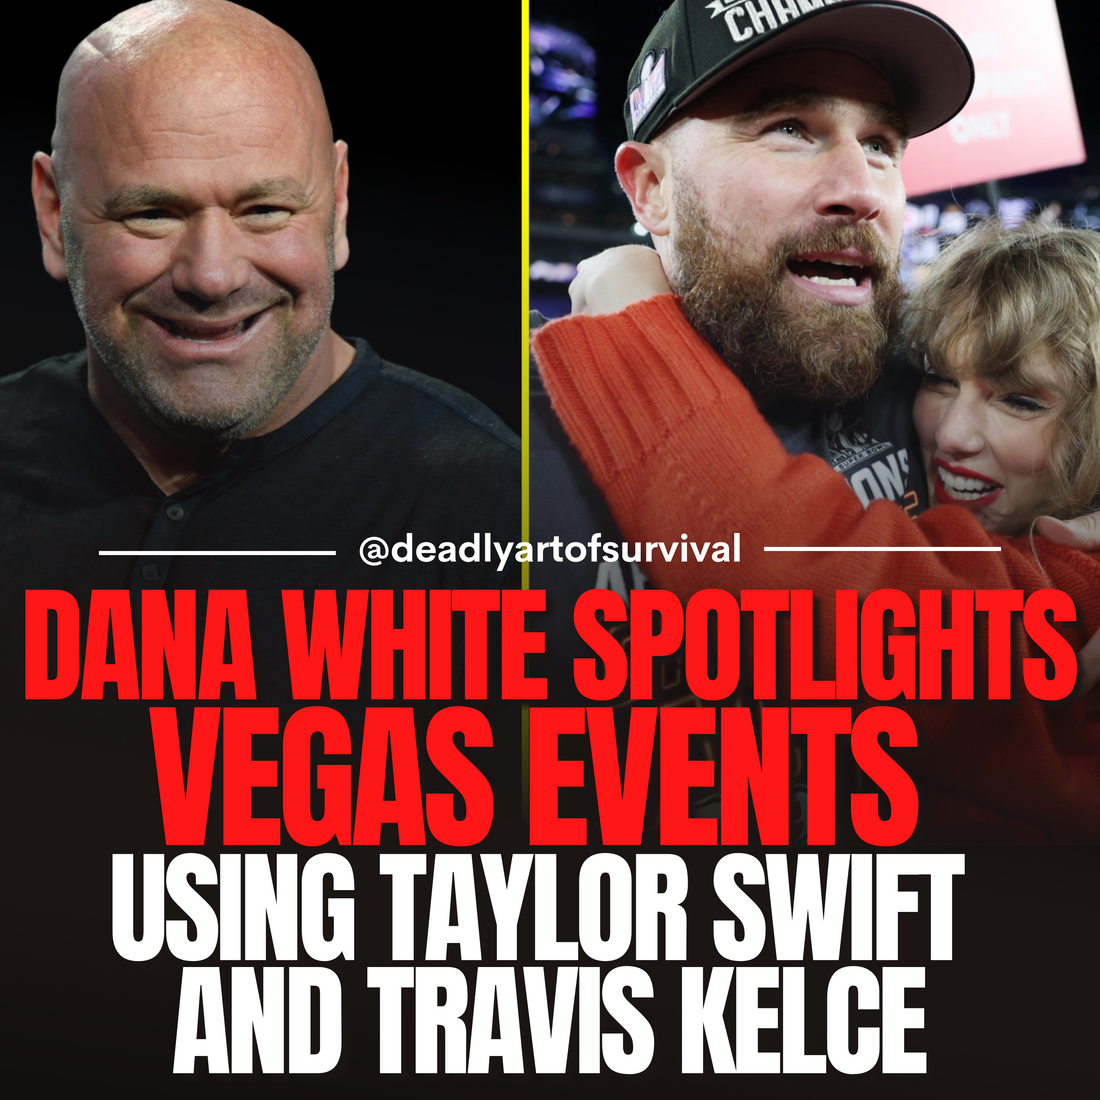 Dana-White-Spotlights-Vegas-Events-by-using-Travis-Kelce-and-Taylor-Swift deadlyartofsurvival.com